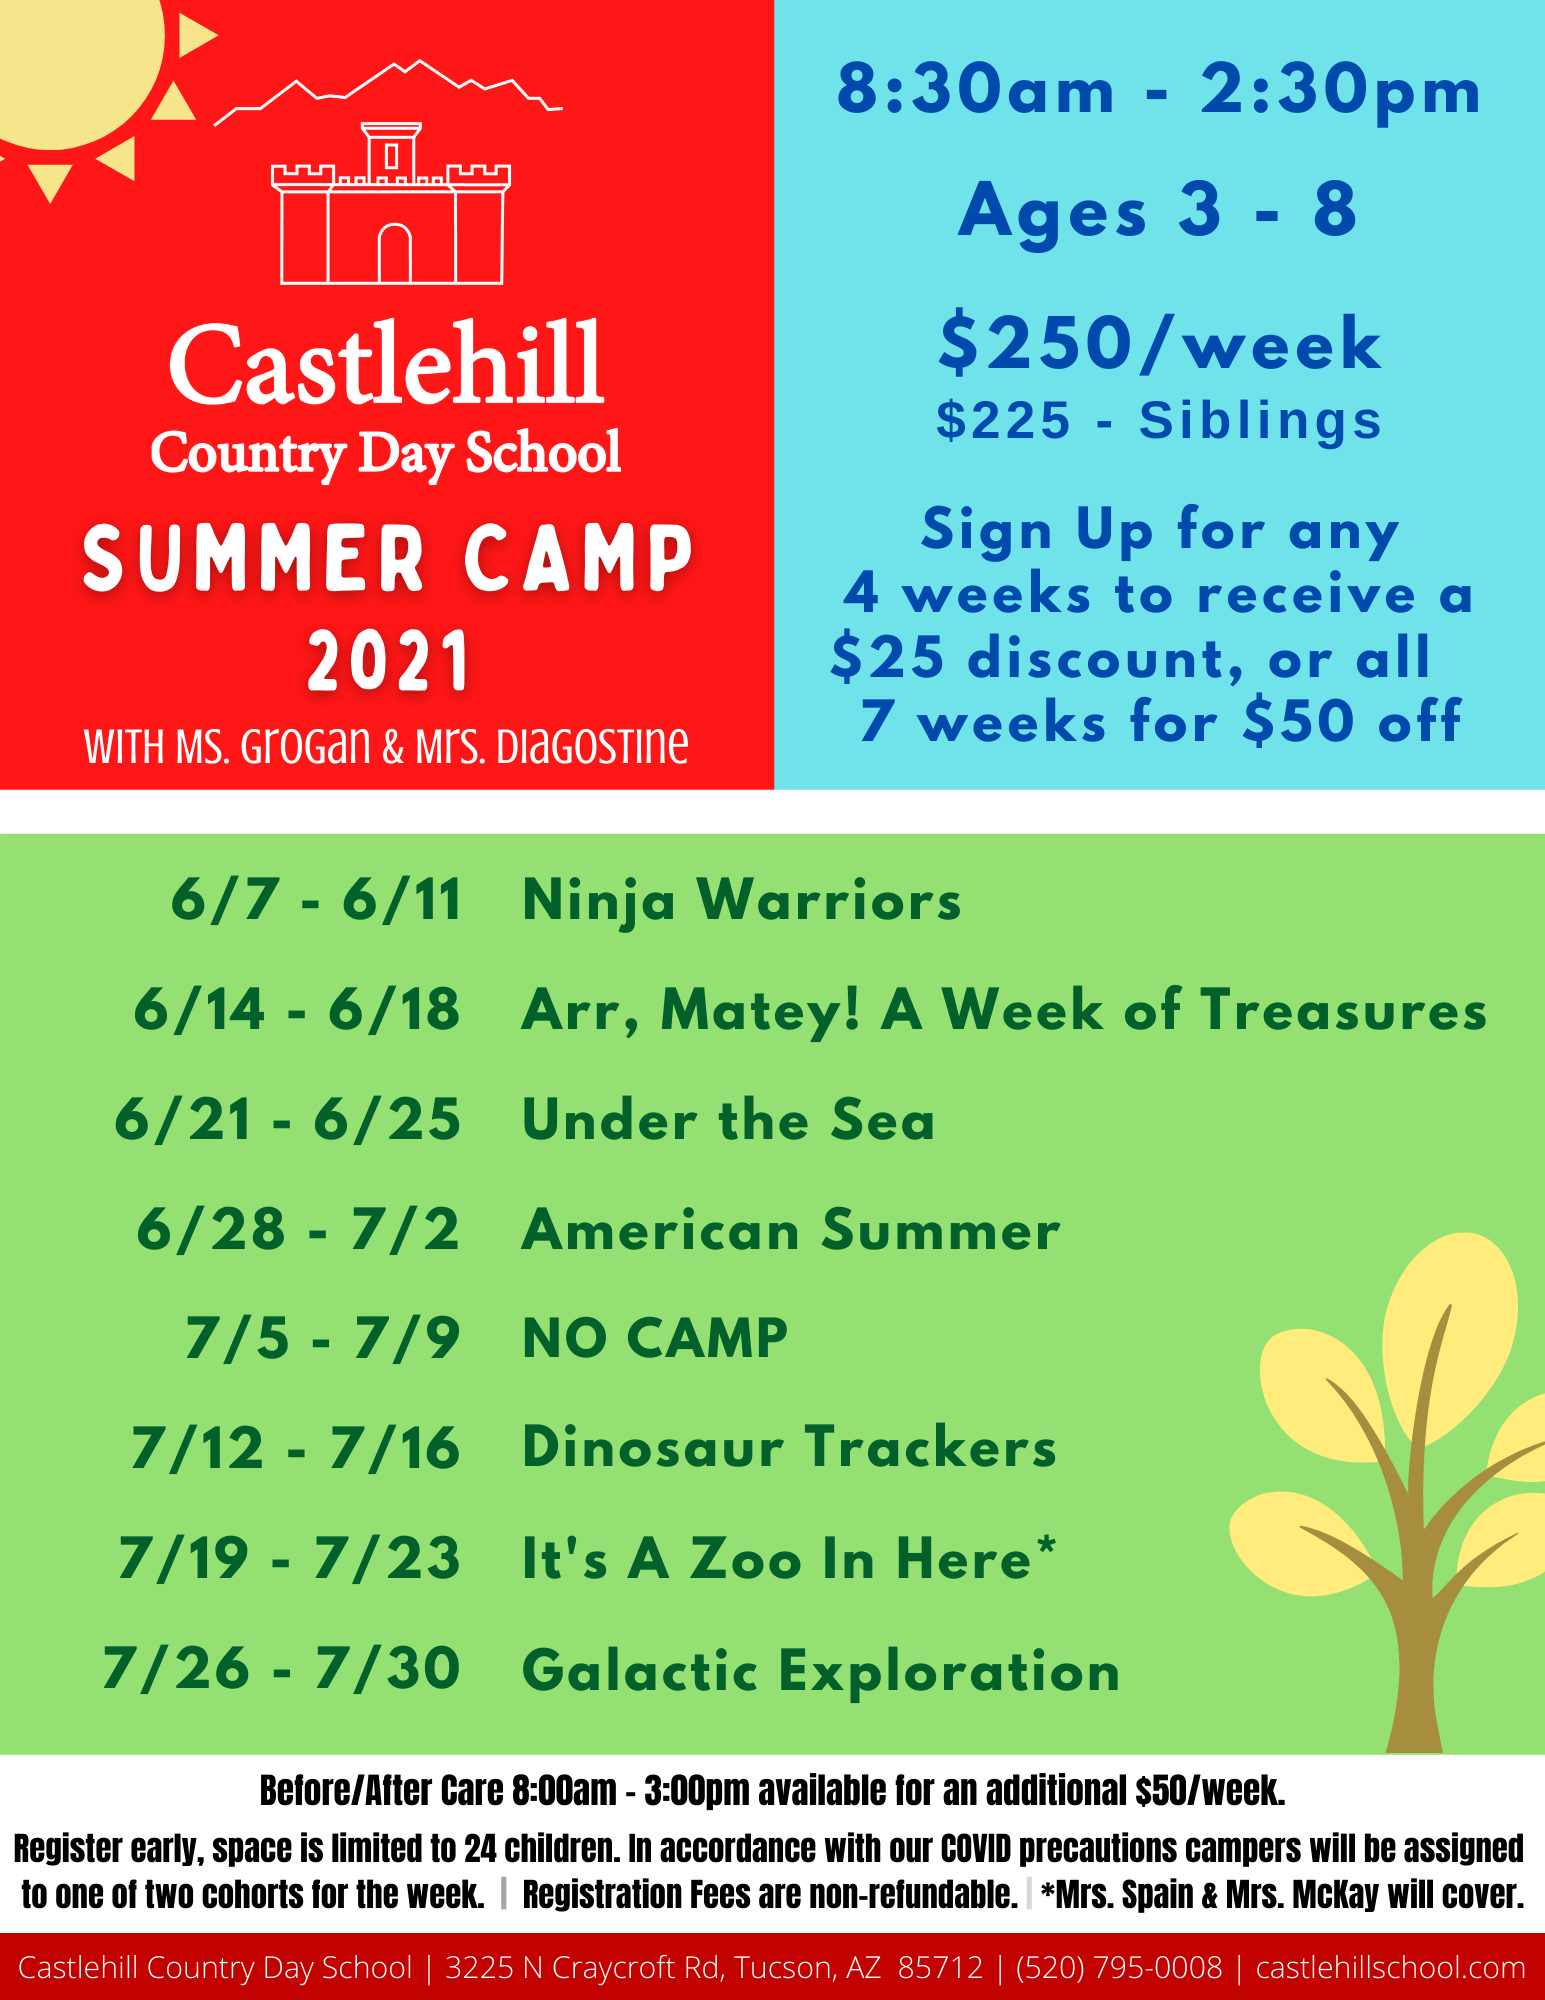 CCDS SUMMER CAMP 2021 - STEAM - Castlehill Country Day School